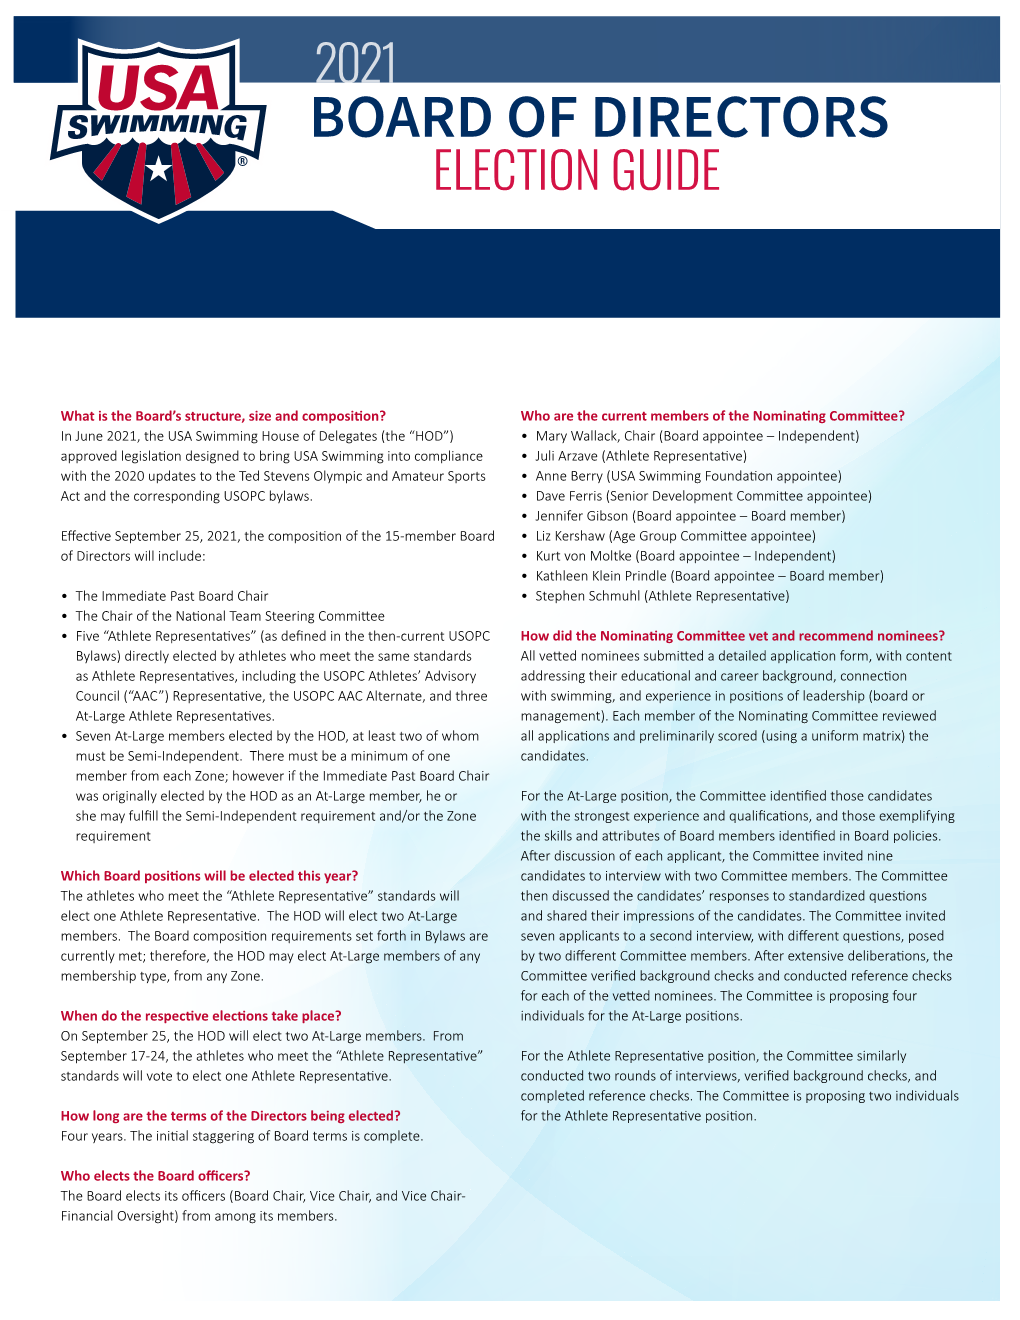 2021 Board of Directors Election Guide